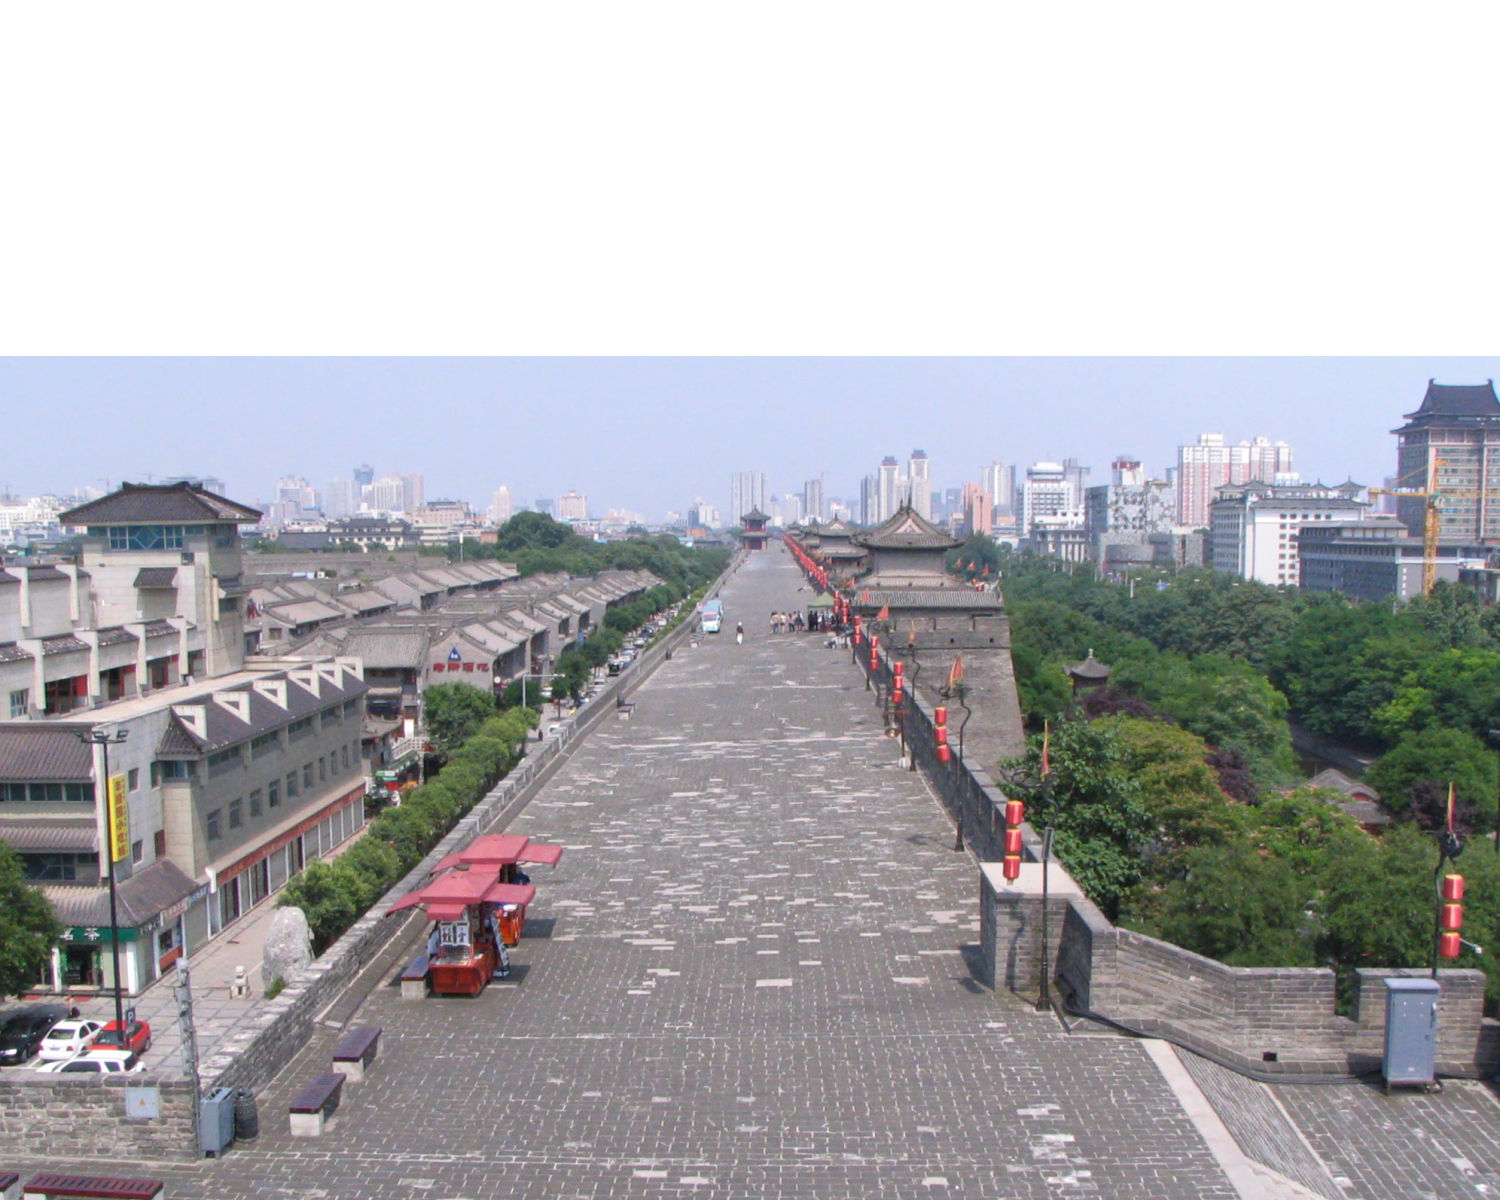 City Wall in Xi'an